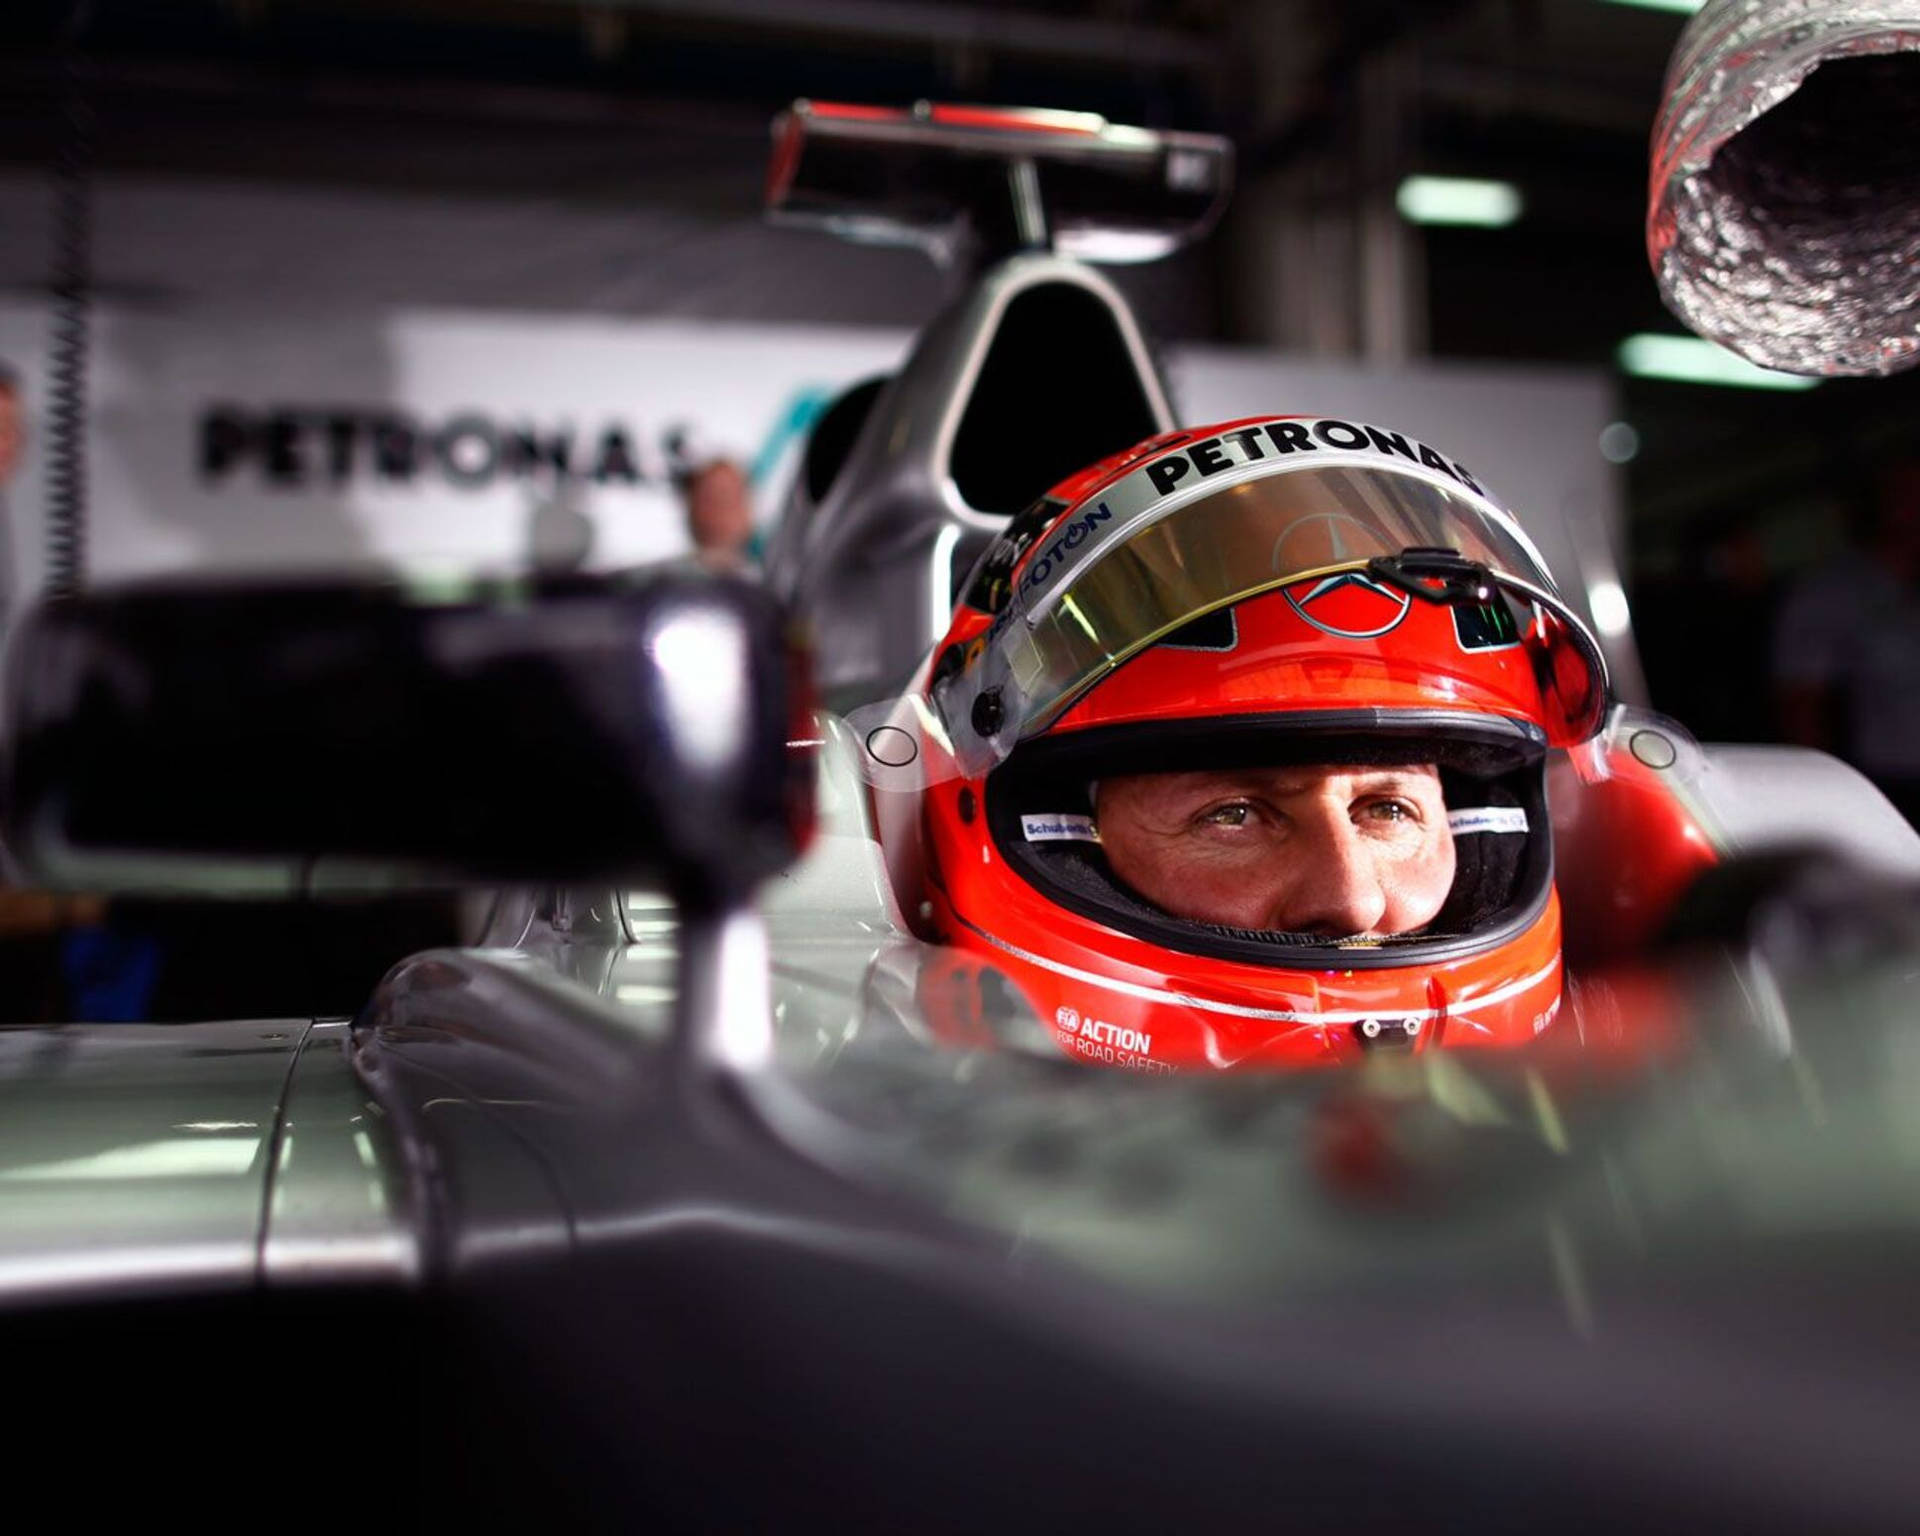 Focused Racer Michael Schumacher Background